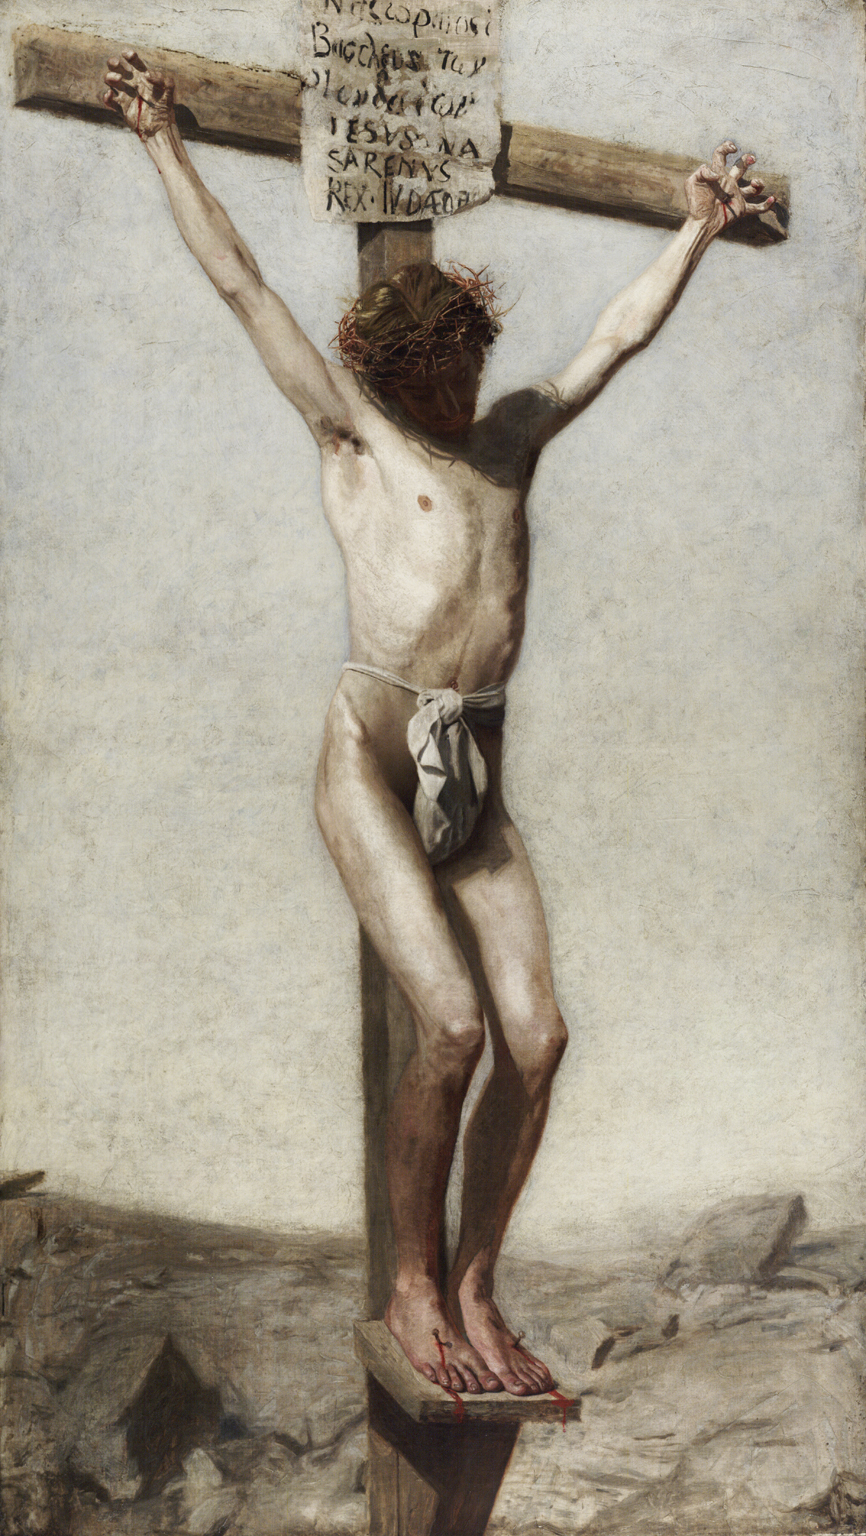 Thomas Eakins, The Crucifixion, 1880, Philadelphia Museum of Art